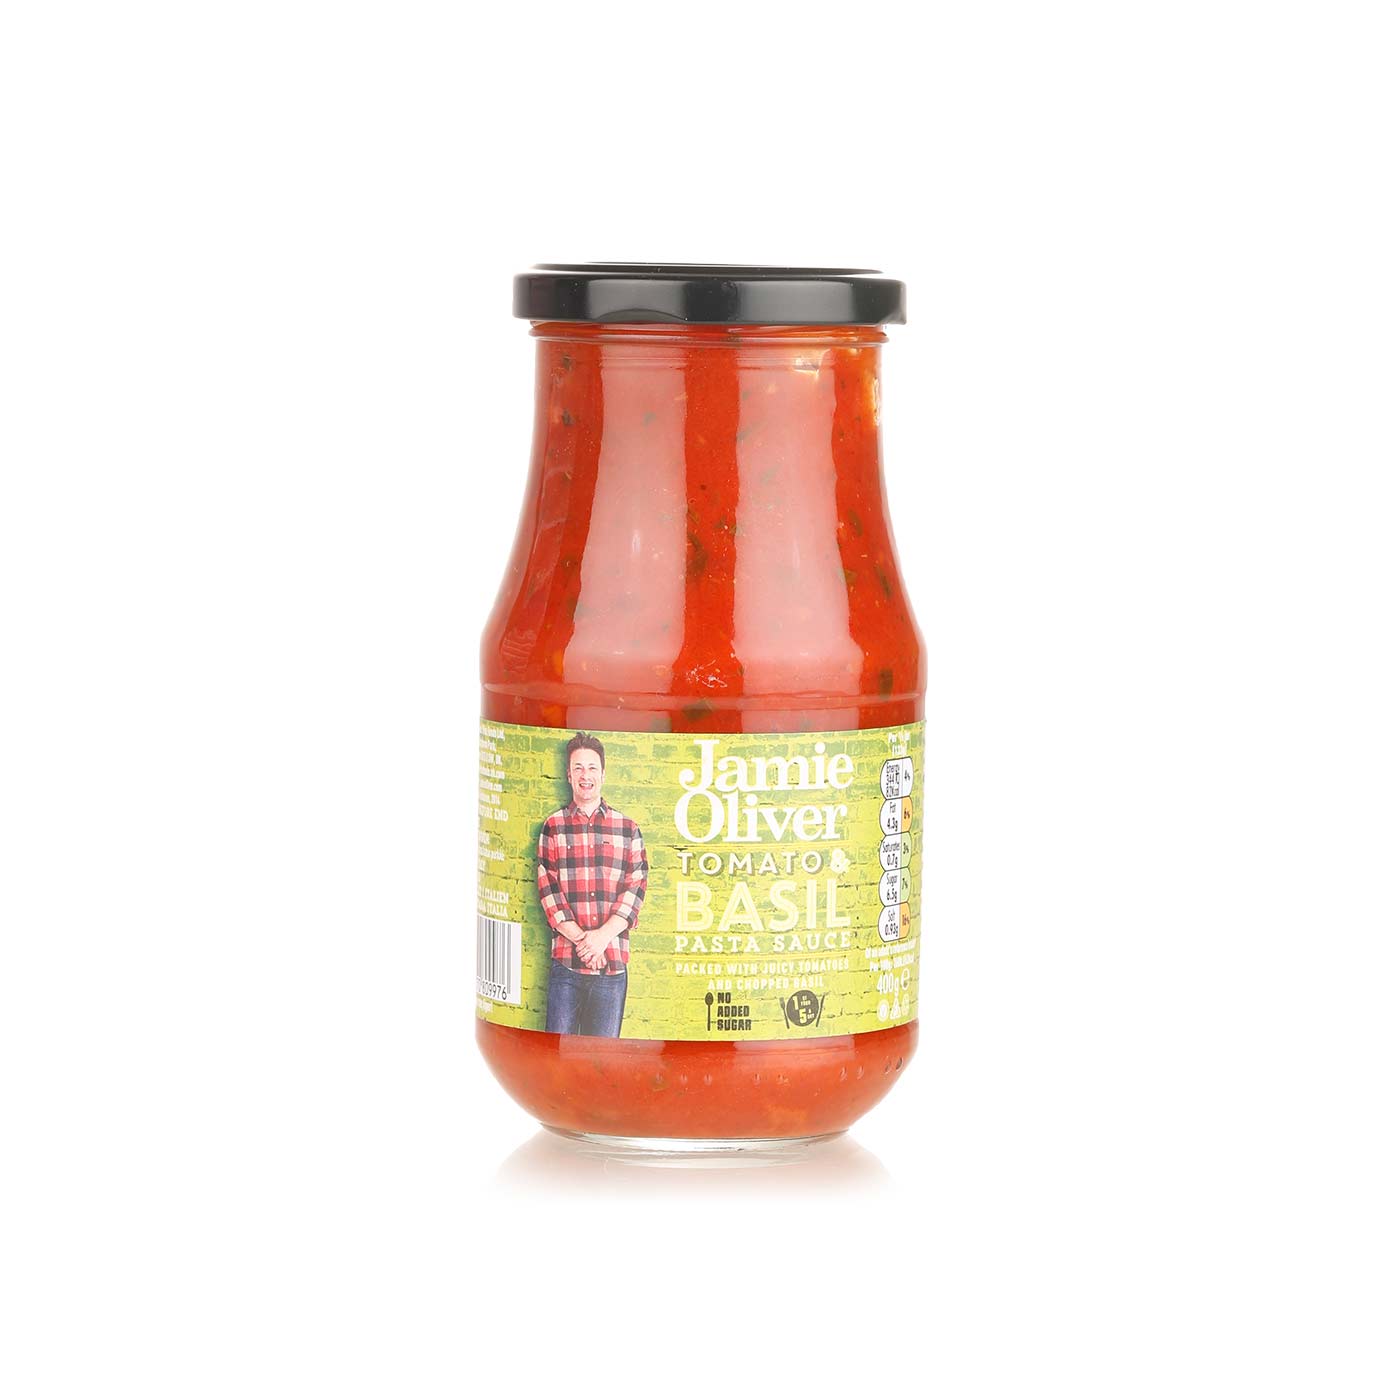 Jamie Oliver tomato basil pasta sauce 400g - Spinneys UAE